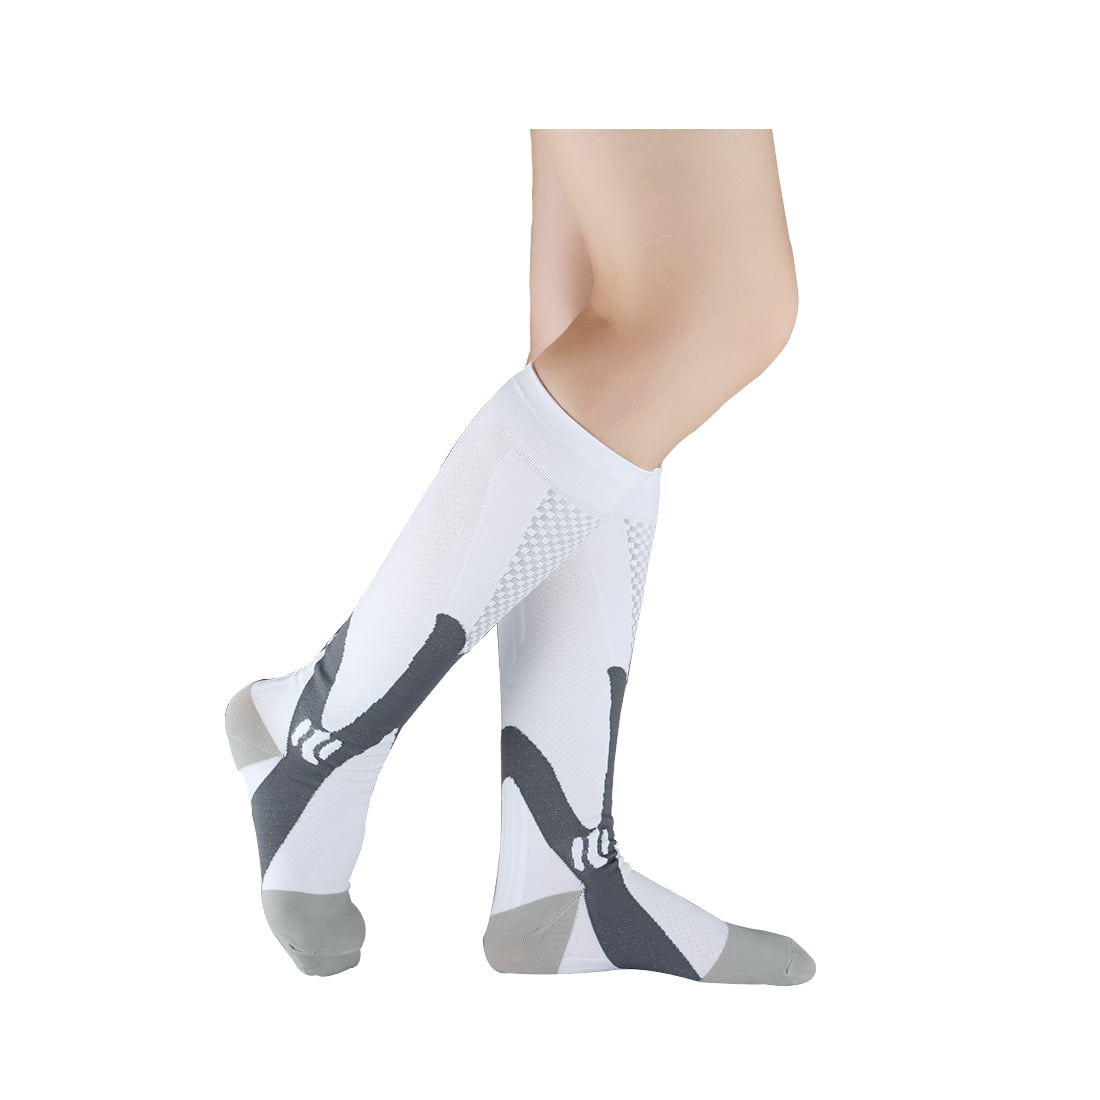 Men 1 pair Stretchy Novelty Pattern Athletic Knee High Socks White 13 ...